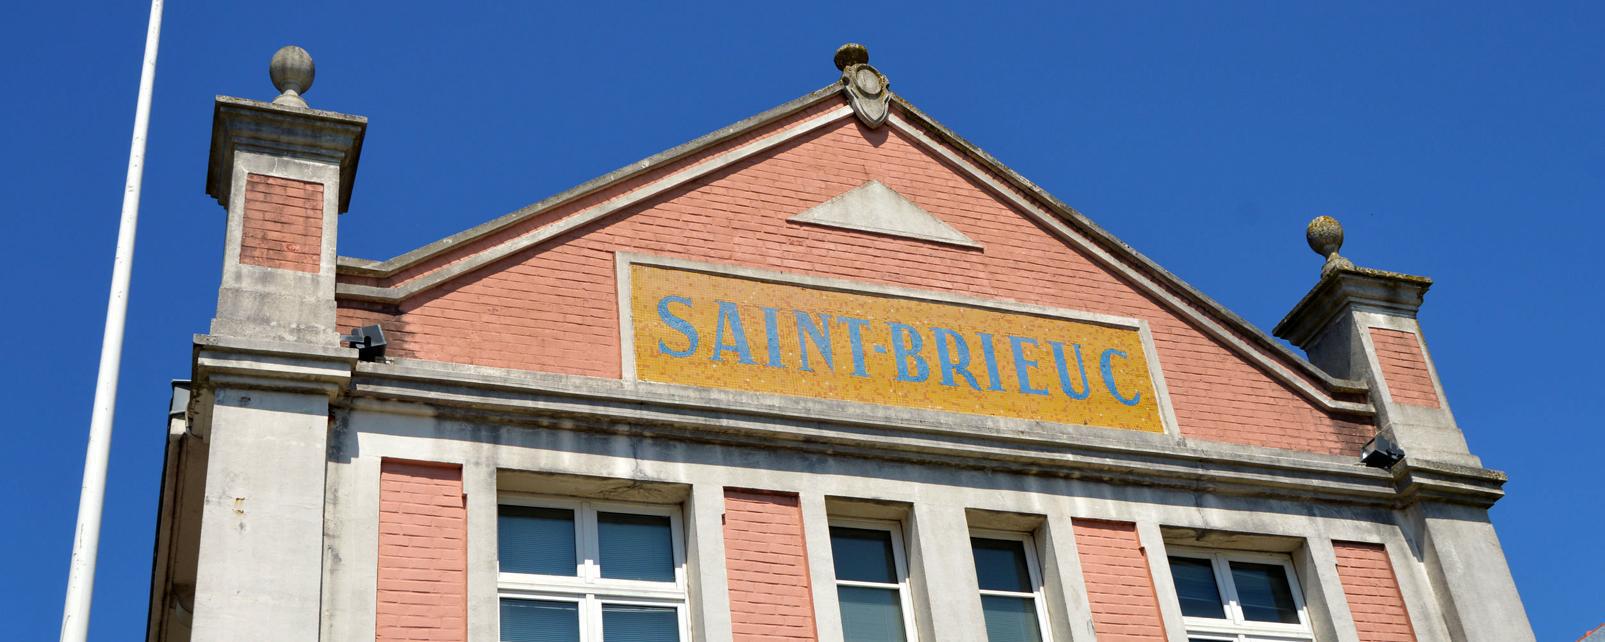 St Brieuc